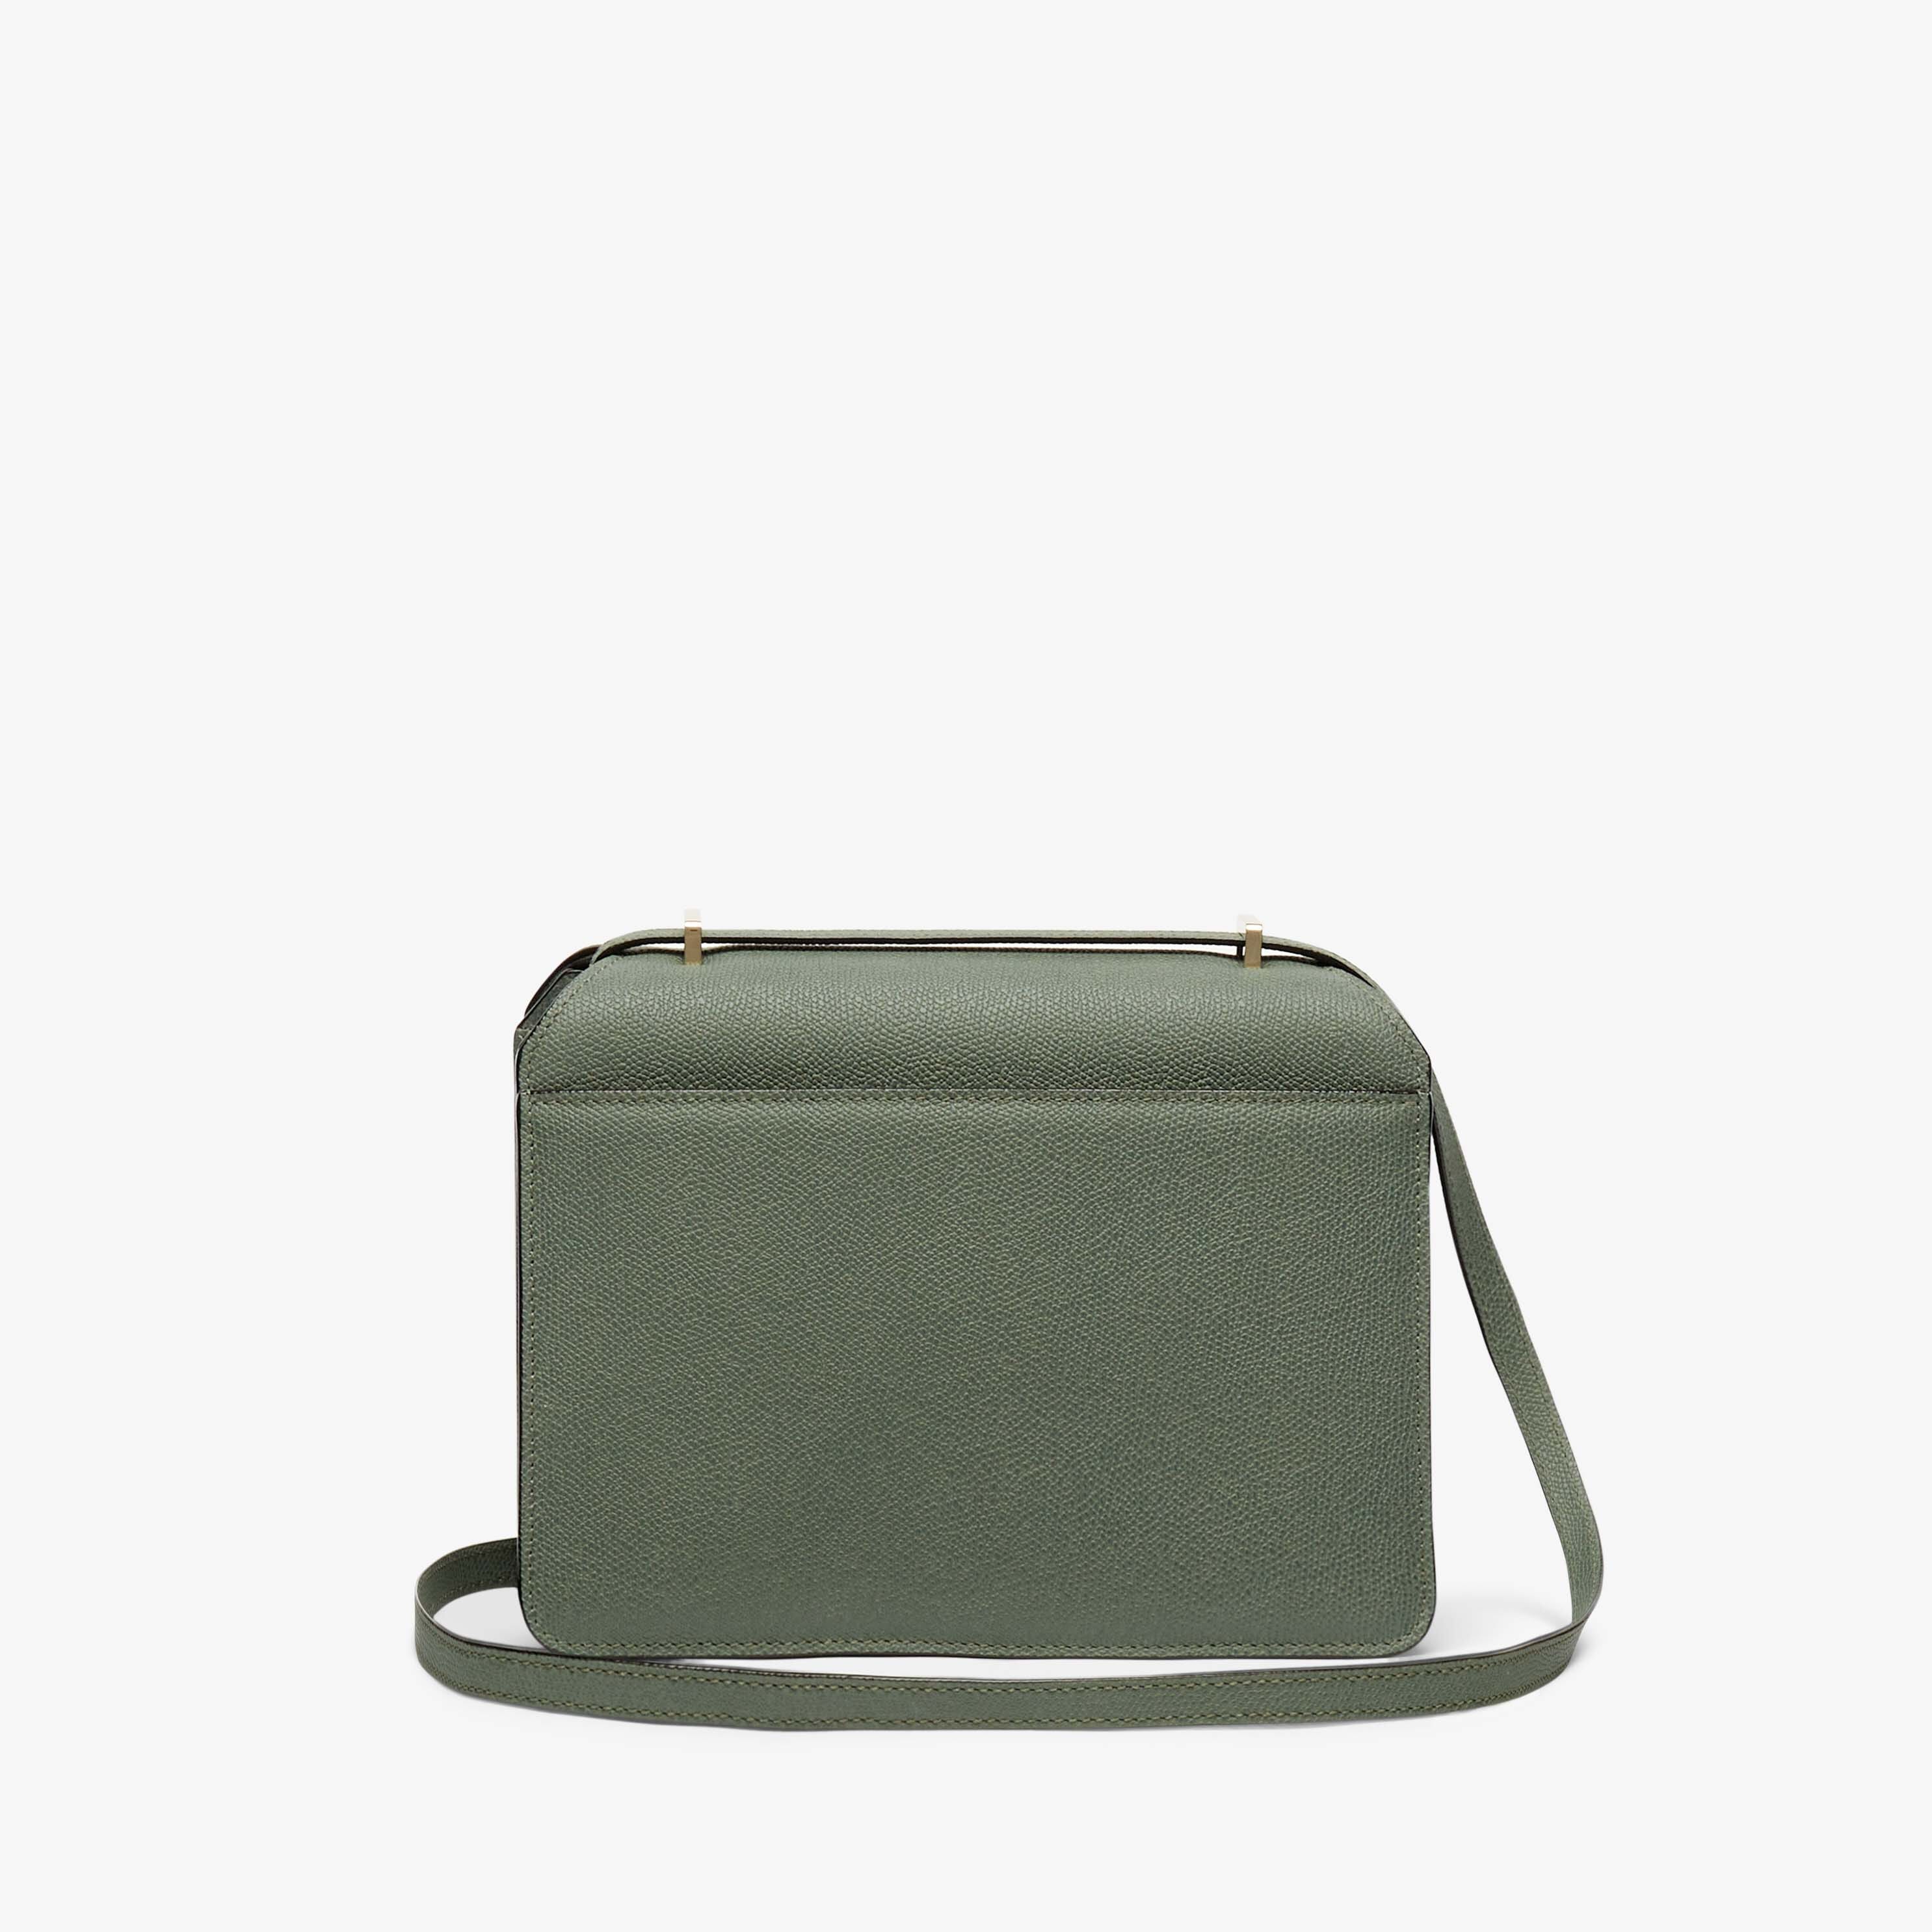 Valextra Twist Medium Leather Top Handle Bag in Green